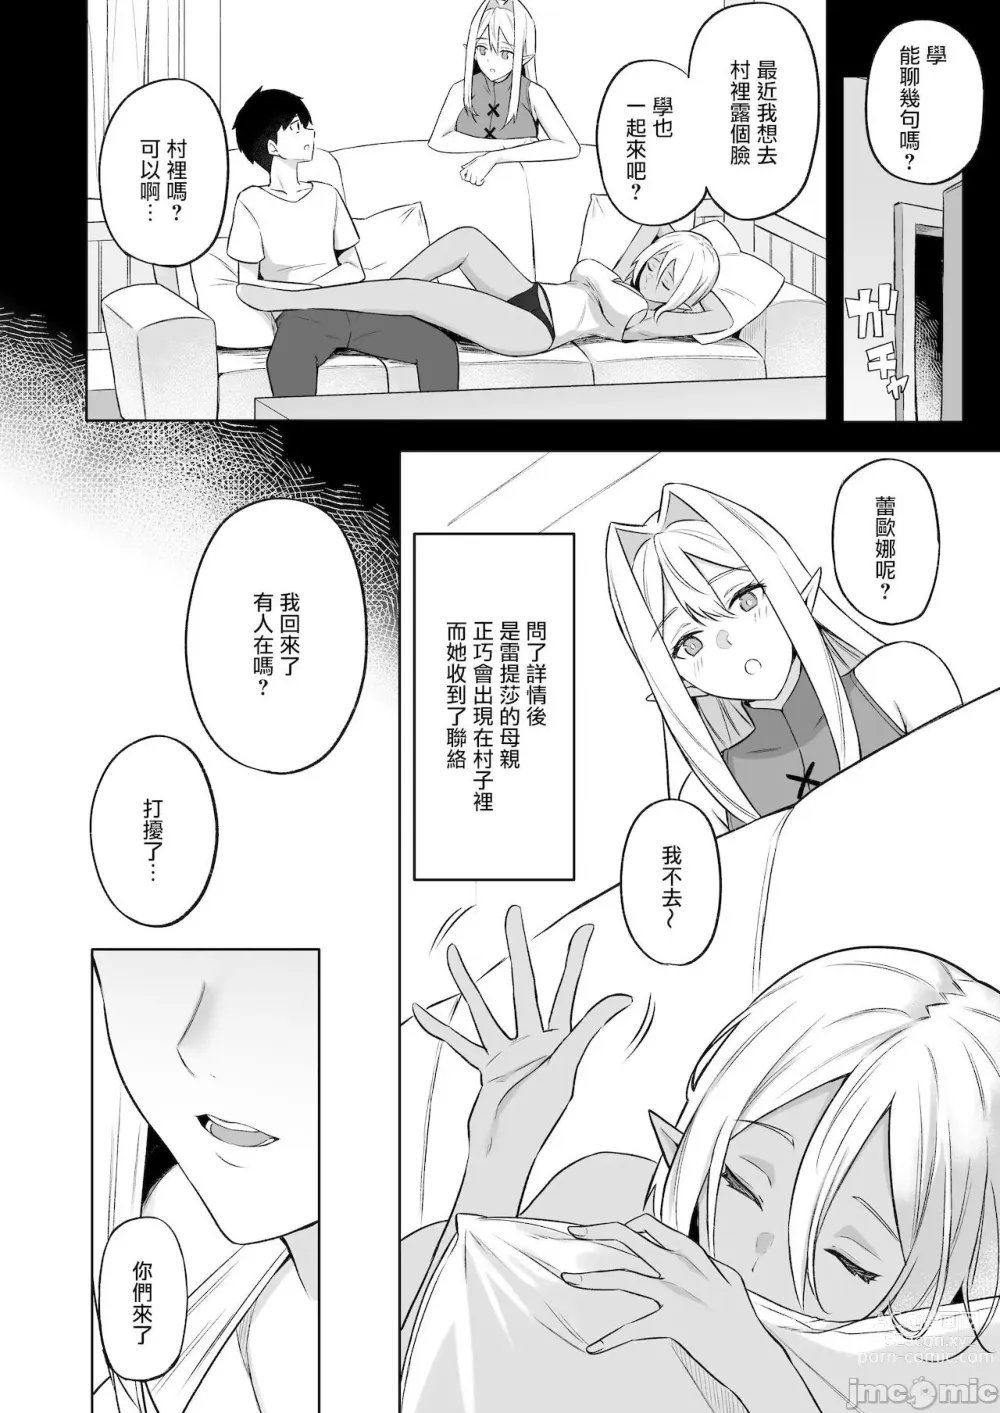 Page 6 of doujinshi 524